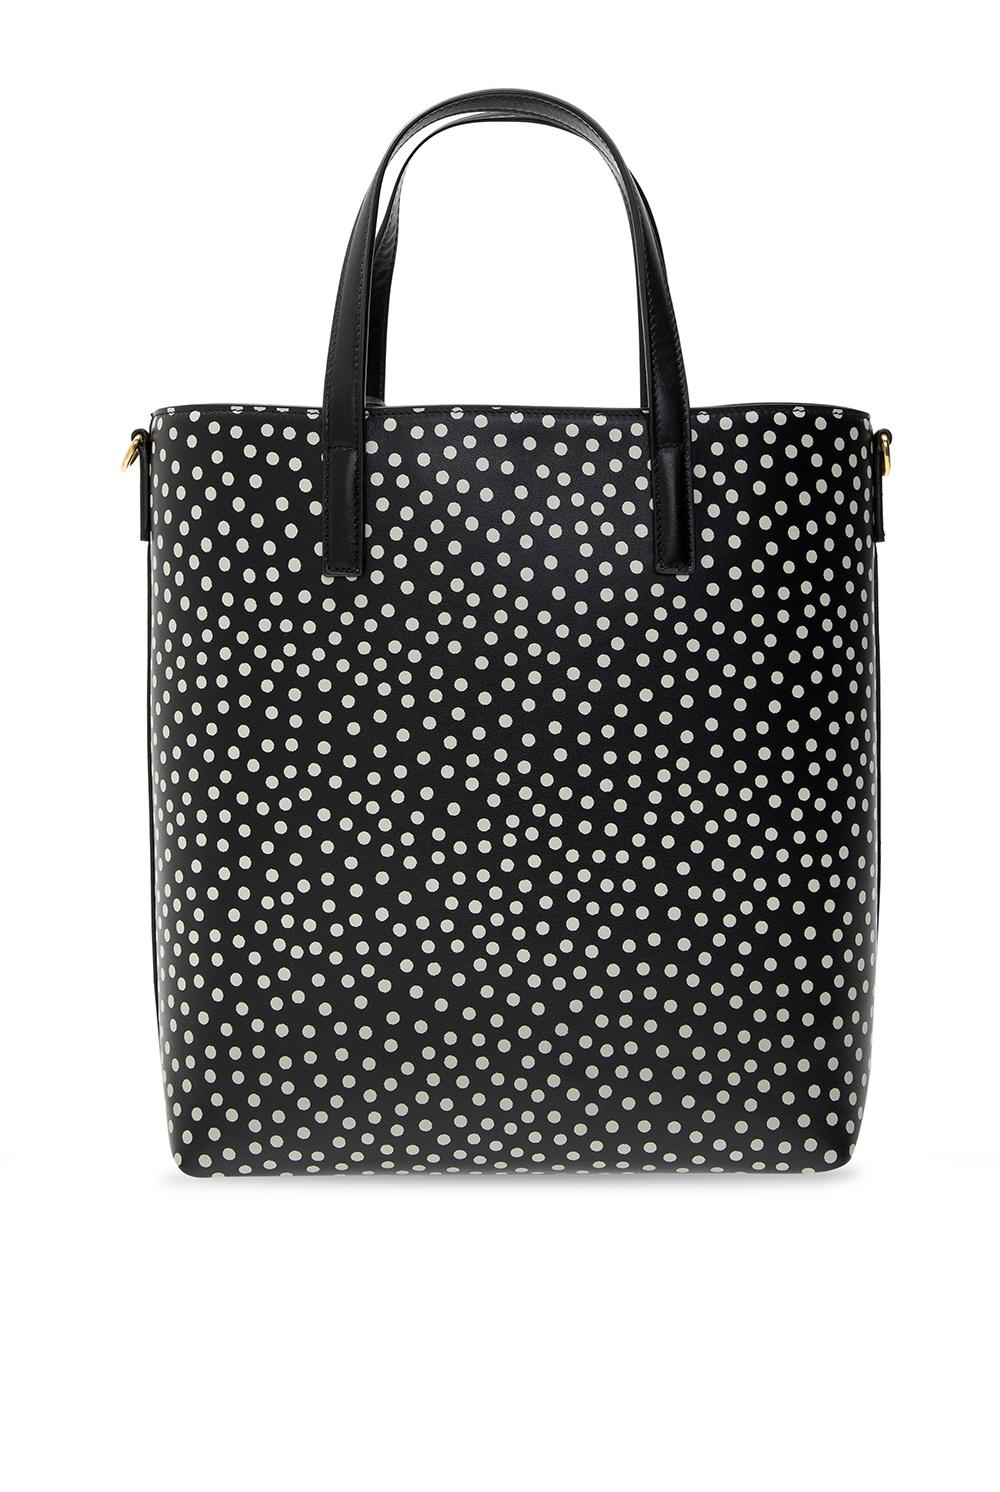 Saint Laurent Soft Leather Black Polka Dot Toy Shopping Bag Pour femmes en vente